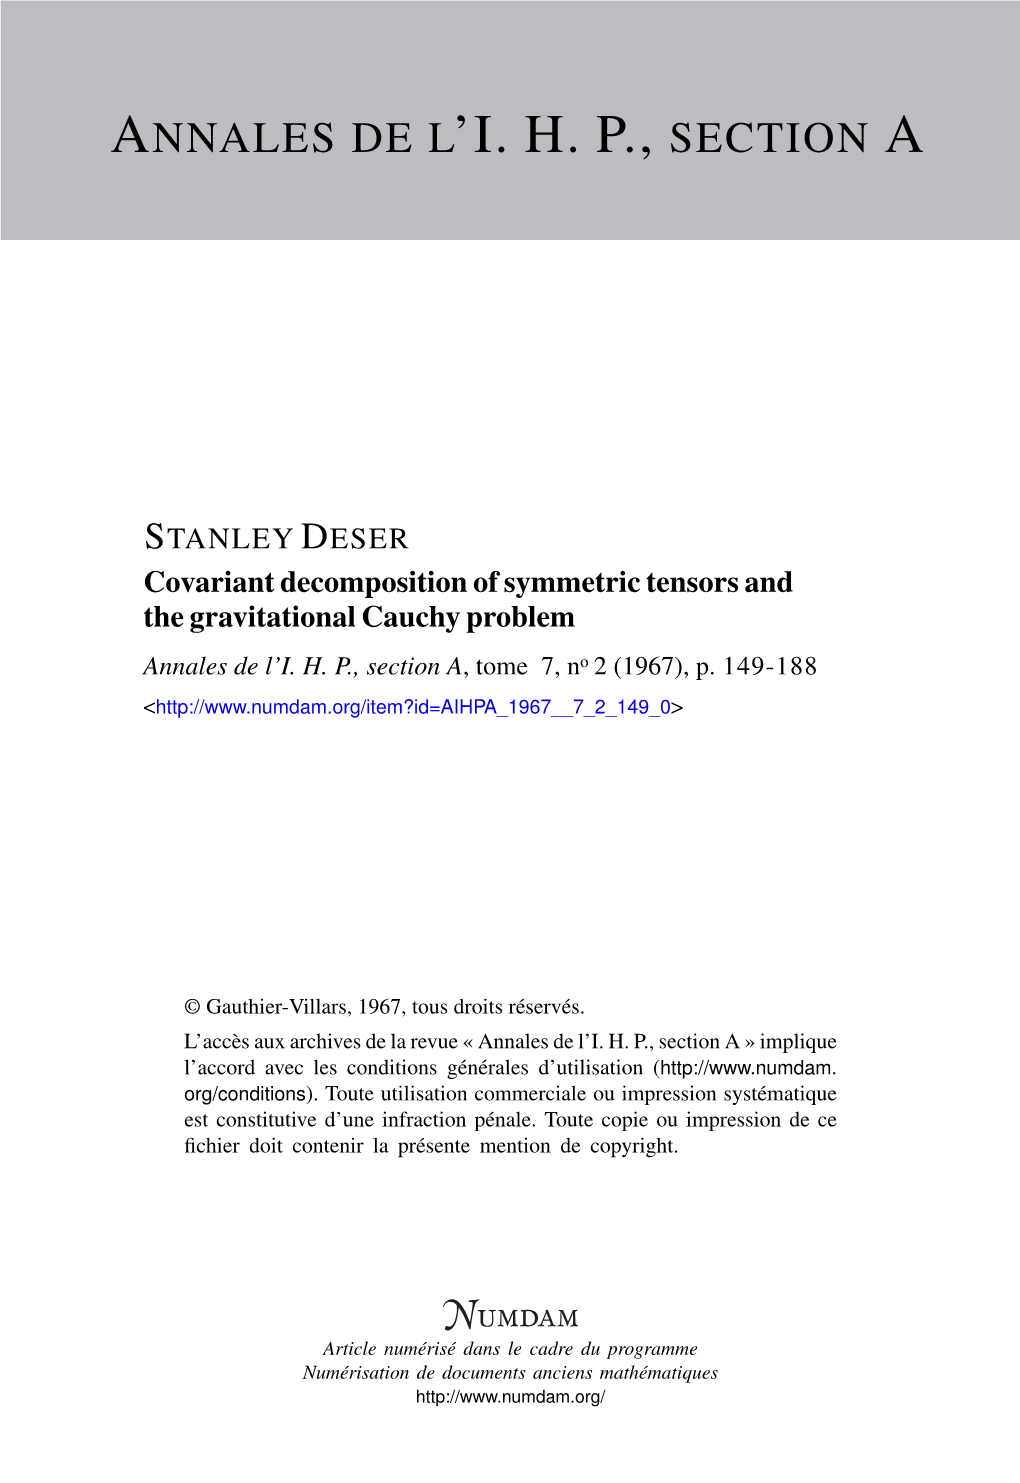 Covariant Decomposition of Symmetric Tensors and the Gravitational Cauchy Problem Annales De L’I